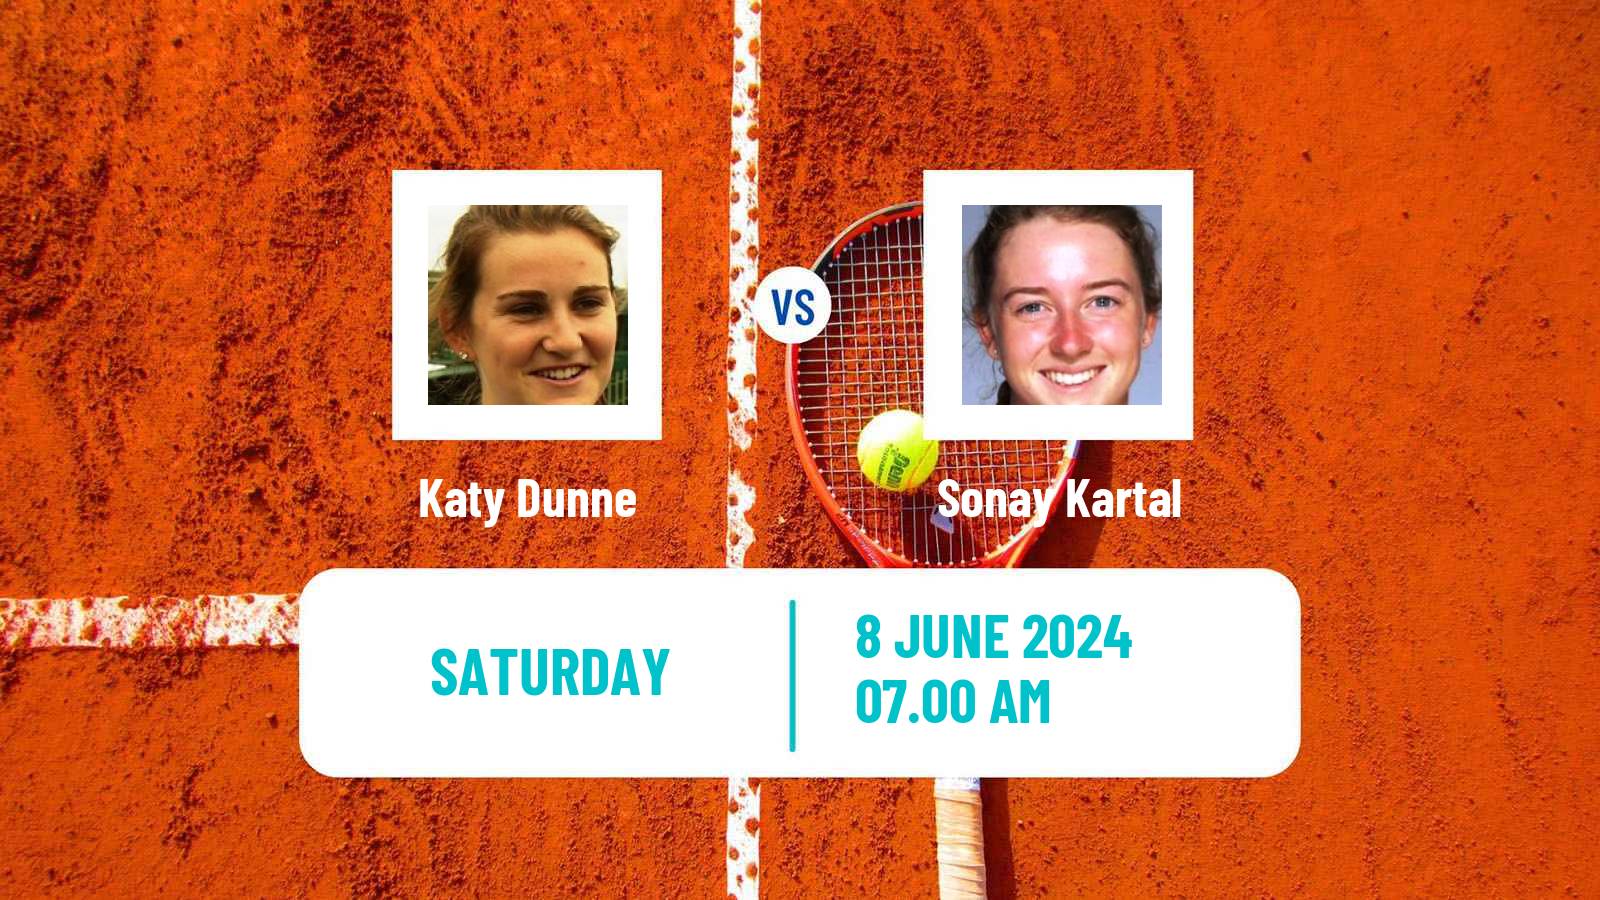 Tennis WTA Nottingham Katy Dunne - Sonay Kartal